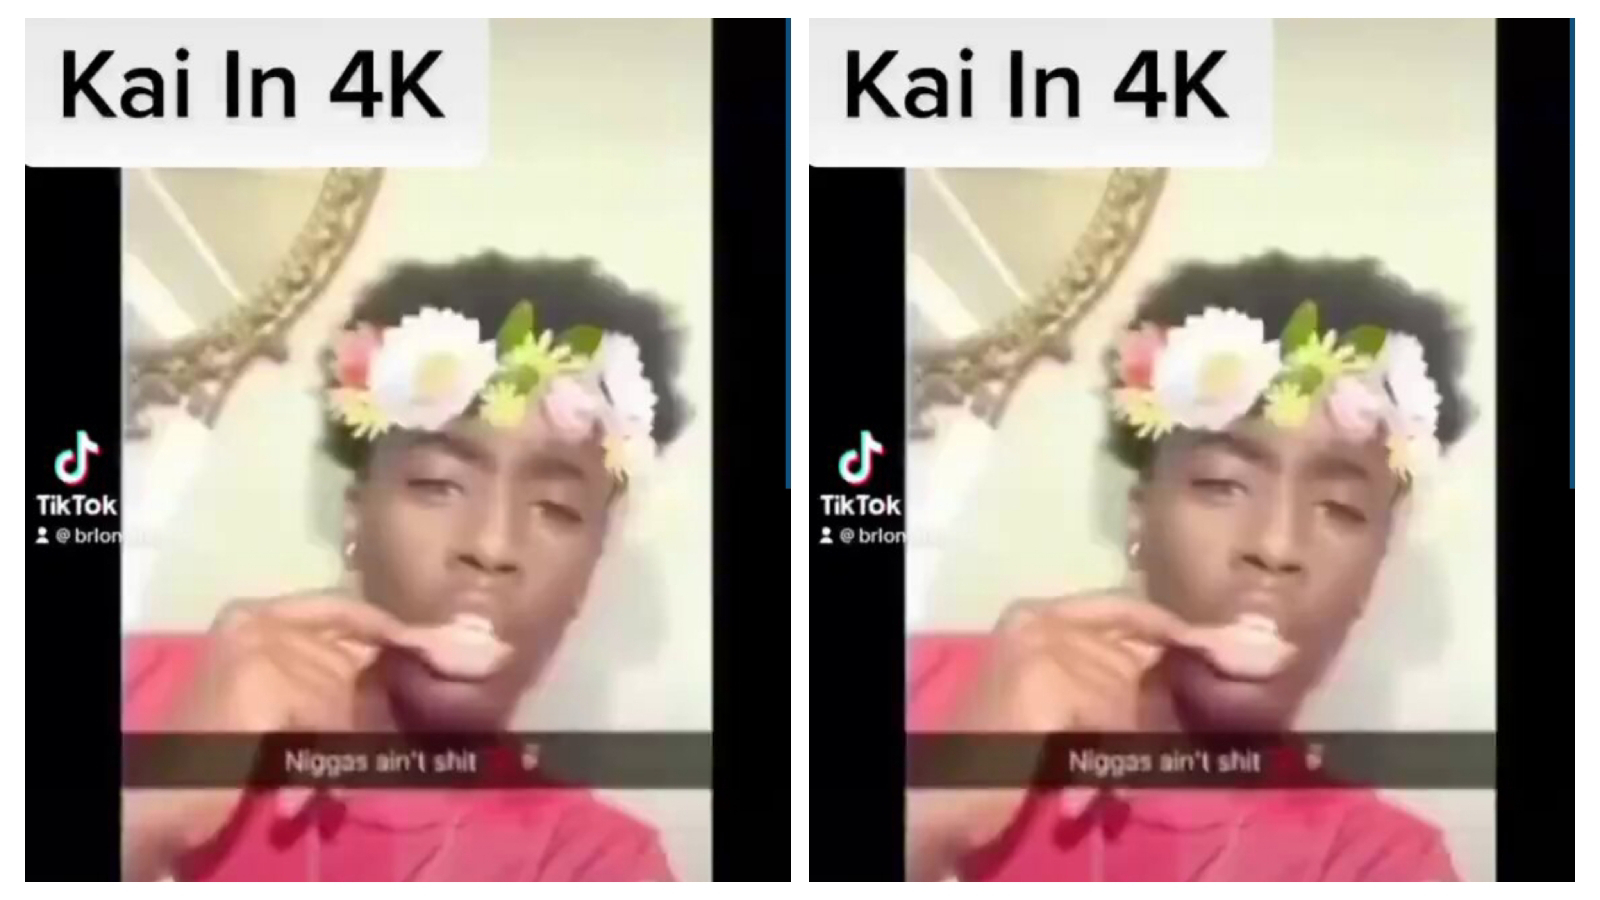 VIDEO A BARBZ Kai Cenat acting zesty with Snapchat flower